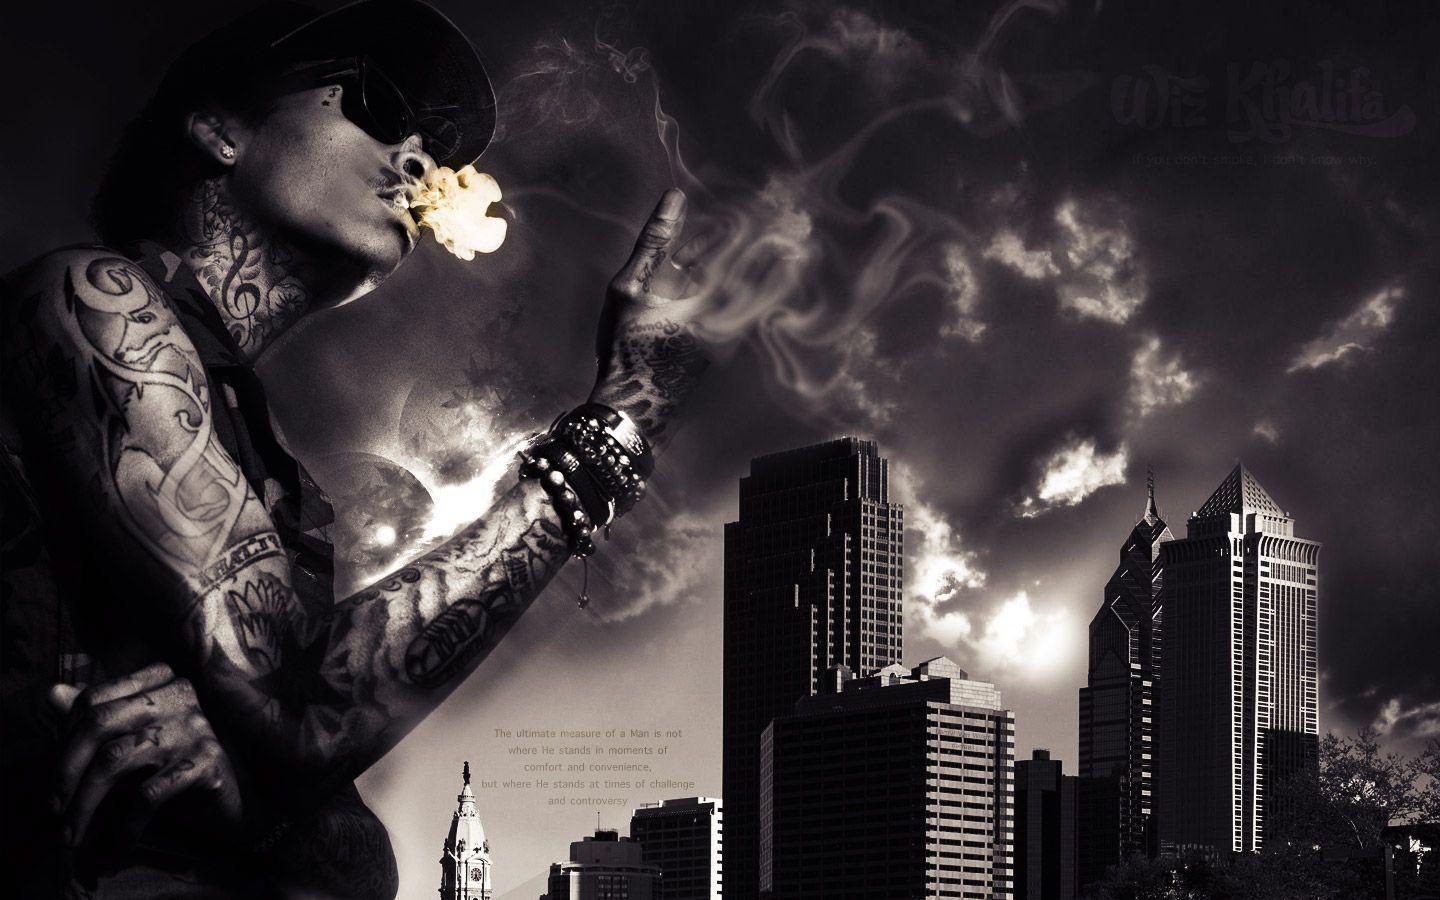 Awesome Wiz Khalifa HD Wallpaper Free Download